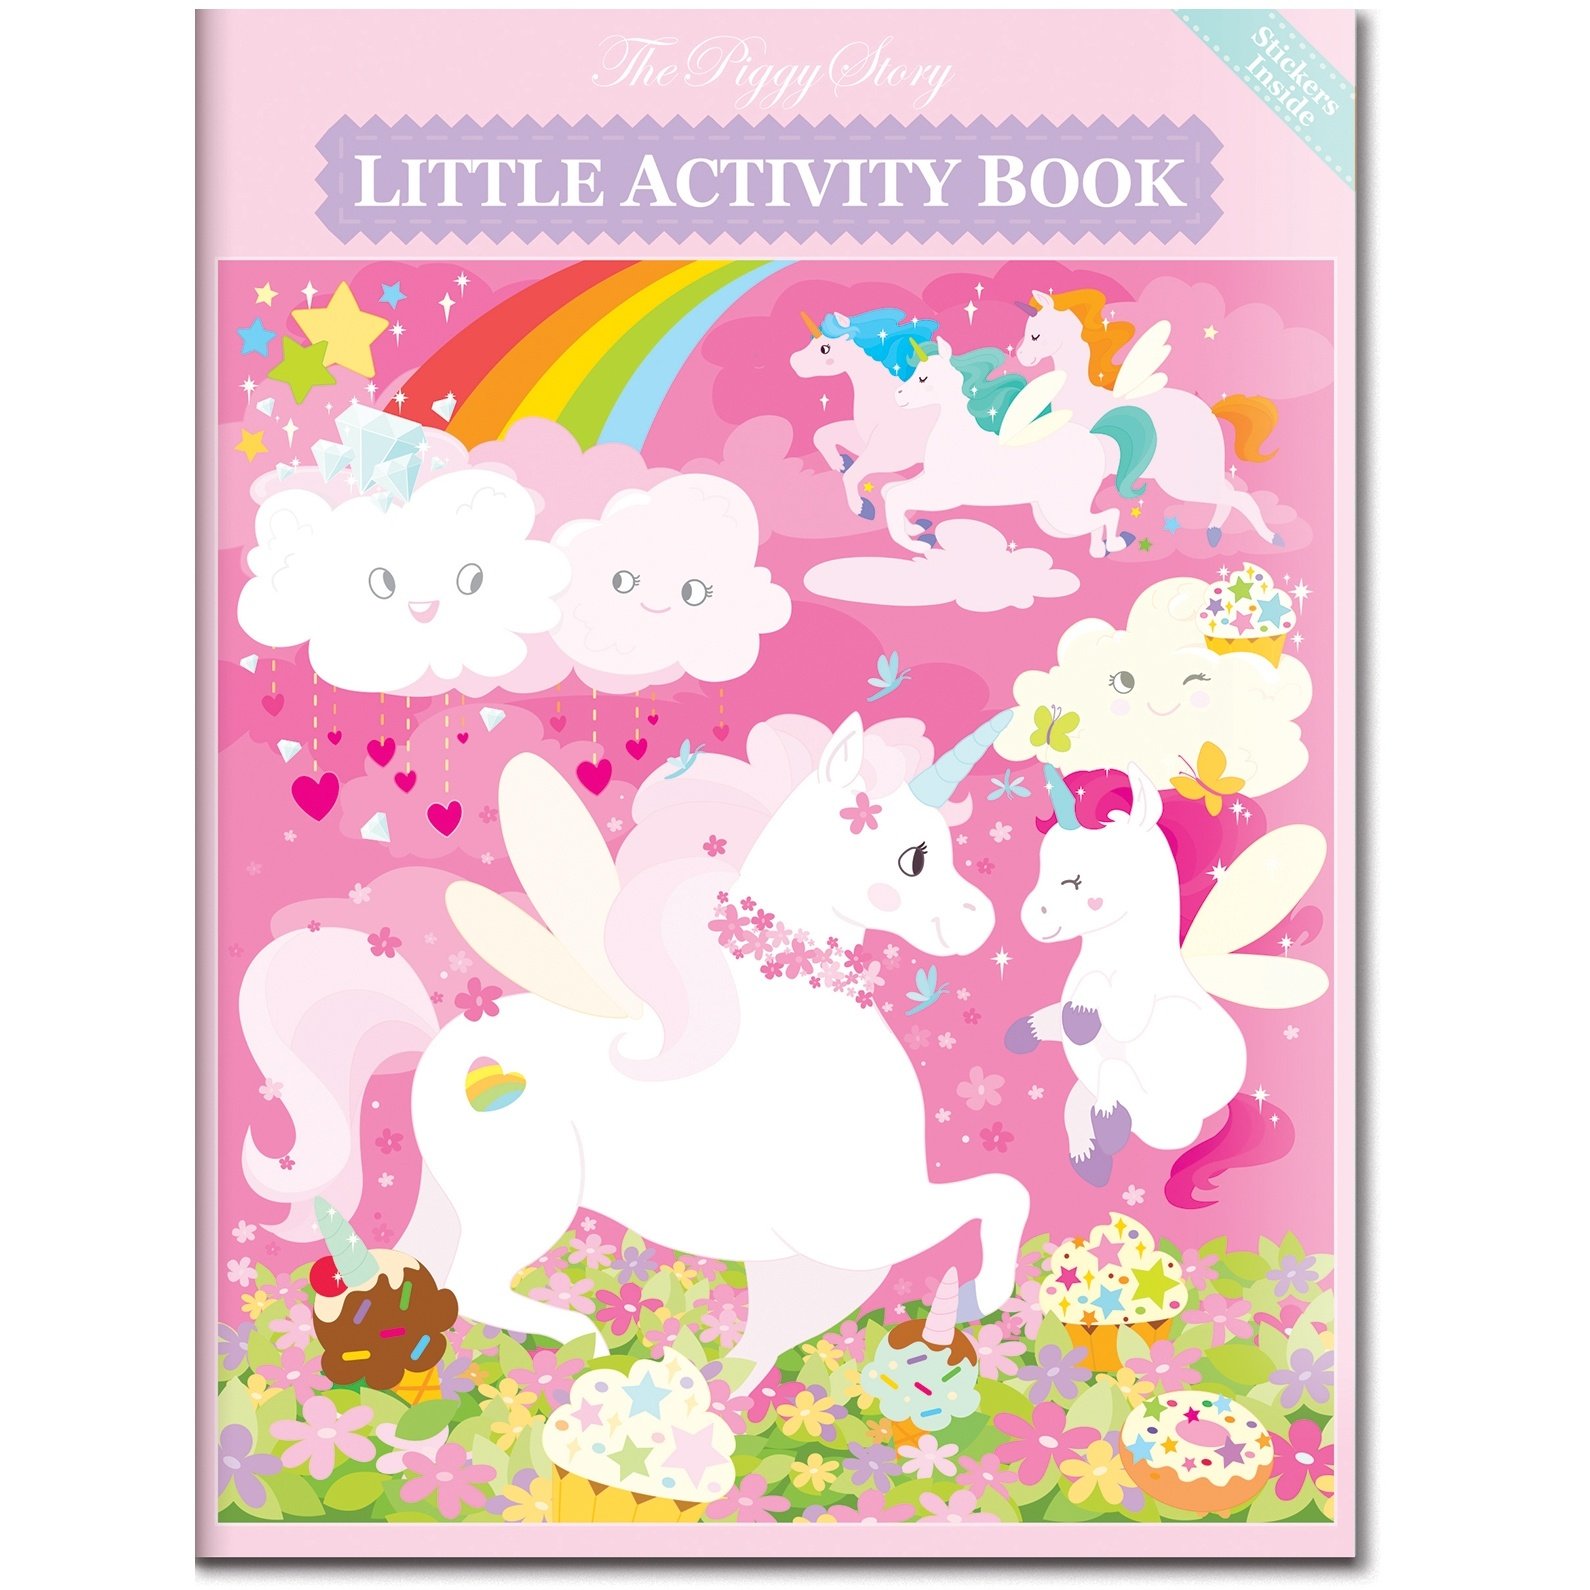 Little Stickers Unicorns [Book]